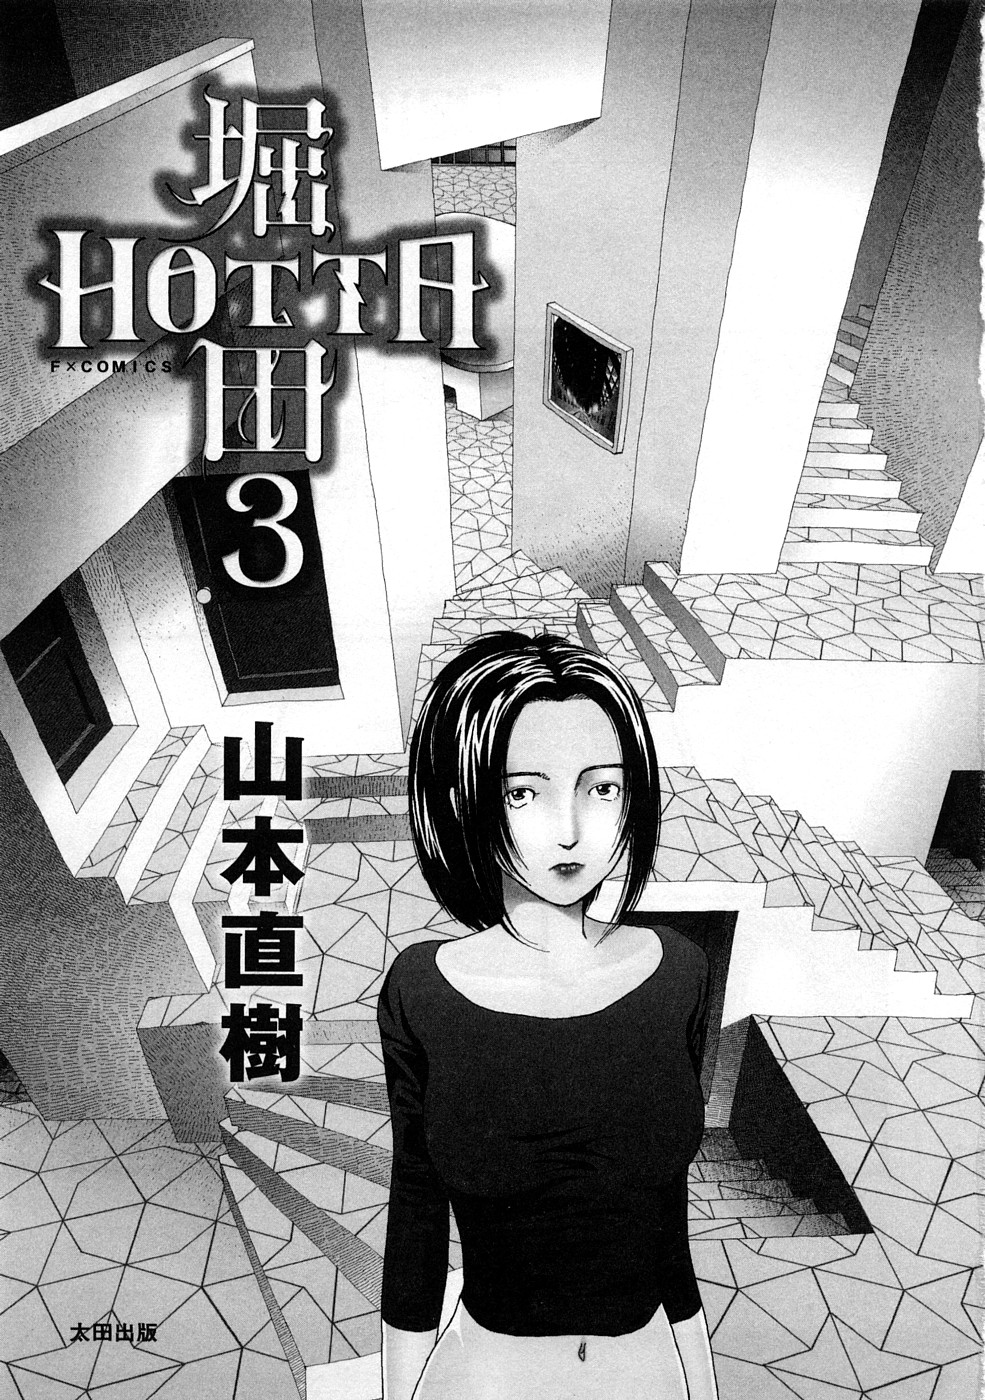 [Yamamoto Naoki] Hotta 3 [山本直樹] 堀田 3 [08-08-05]